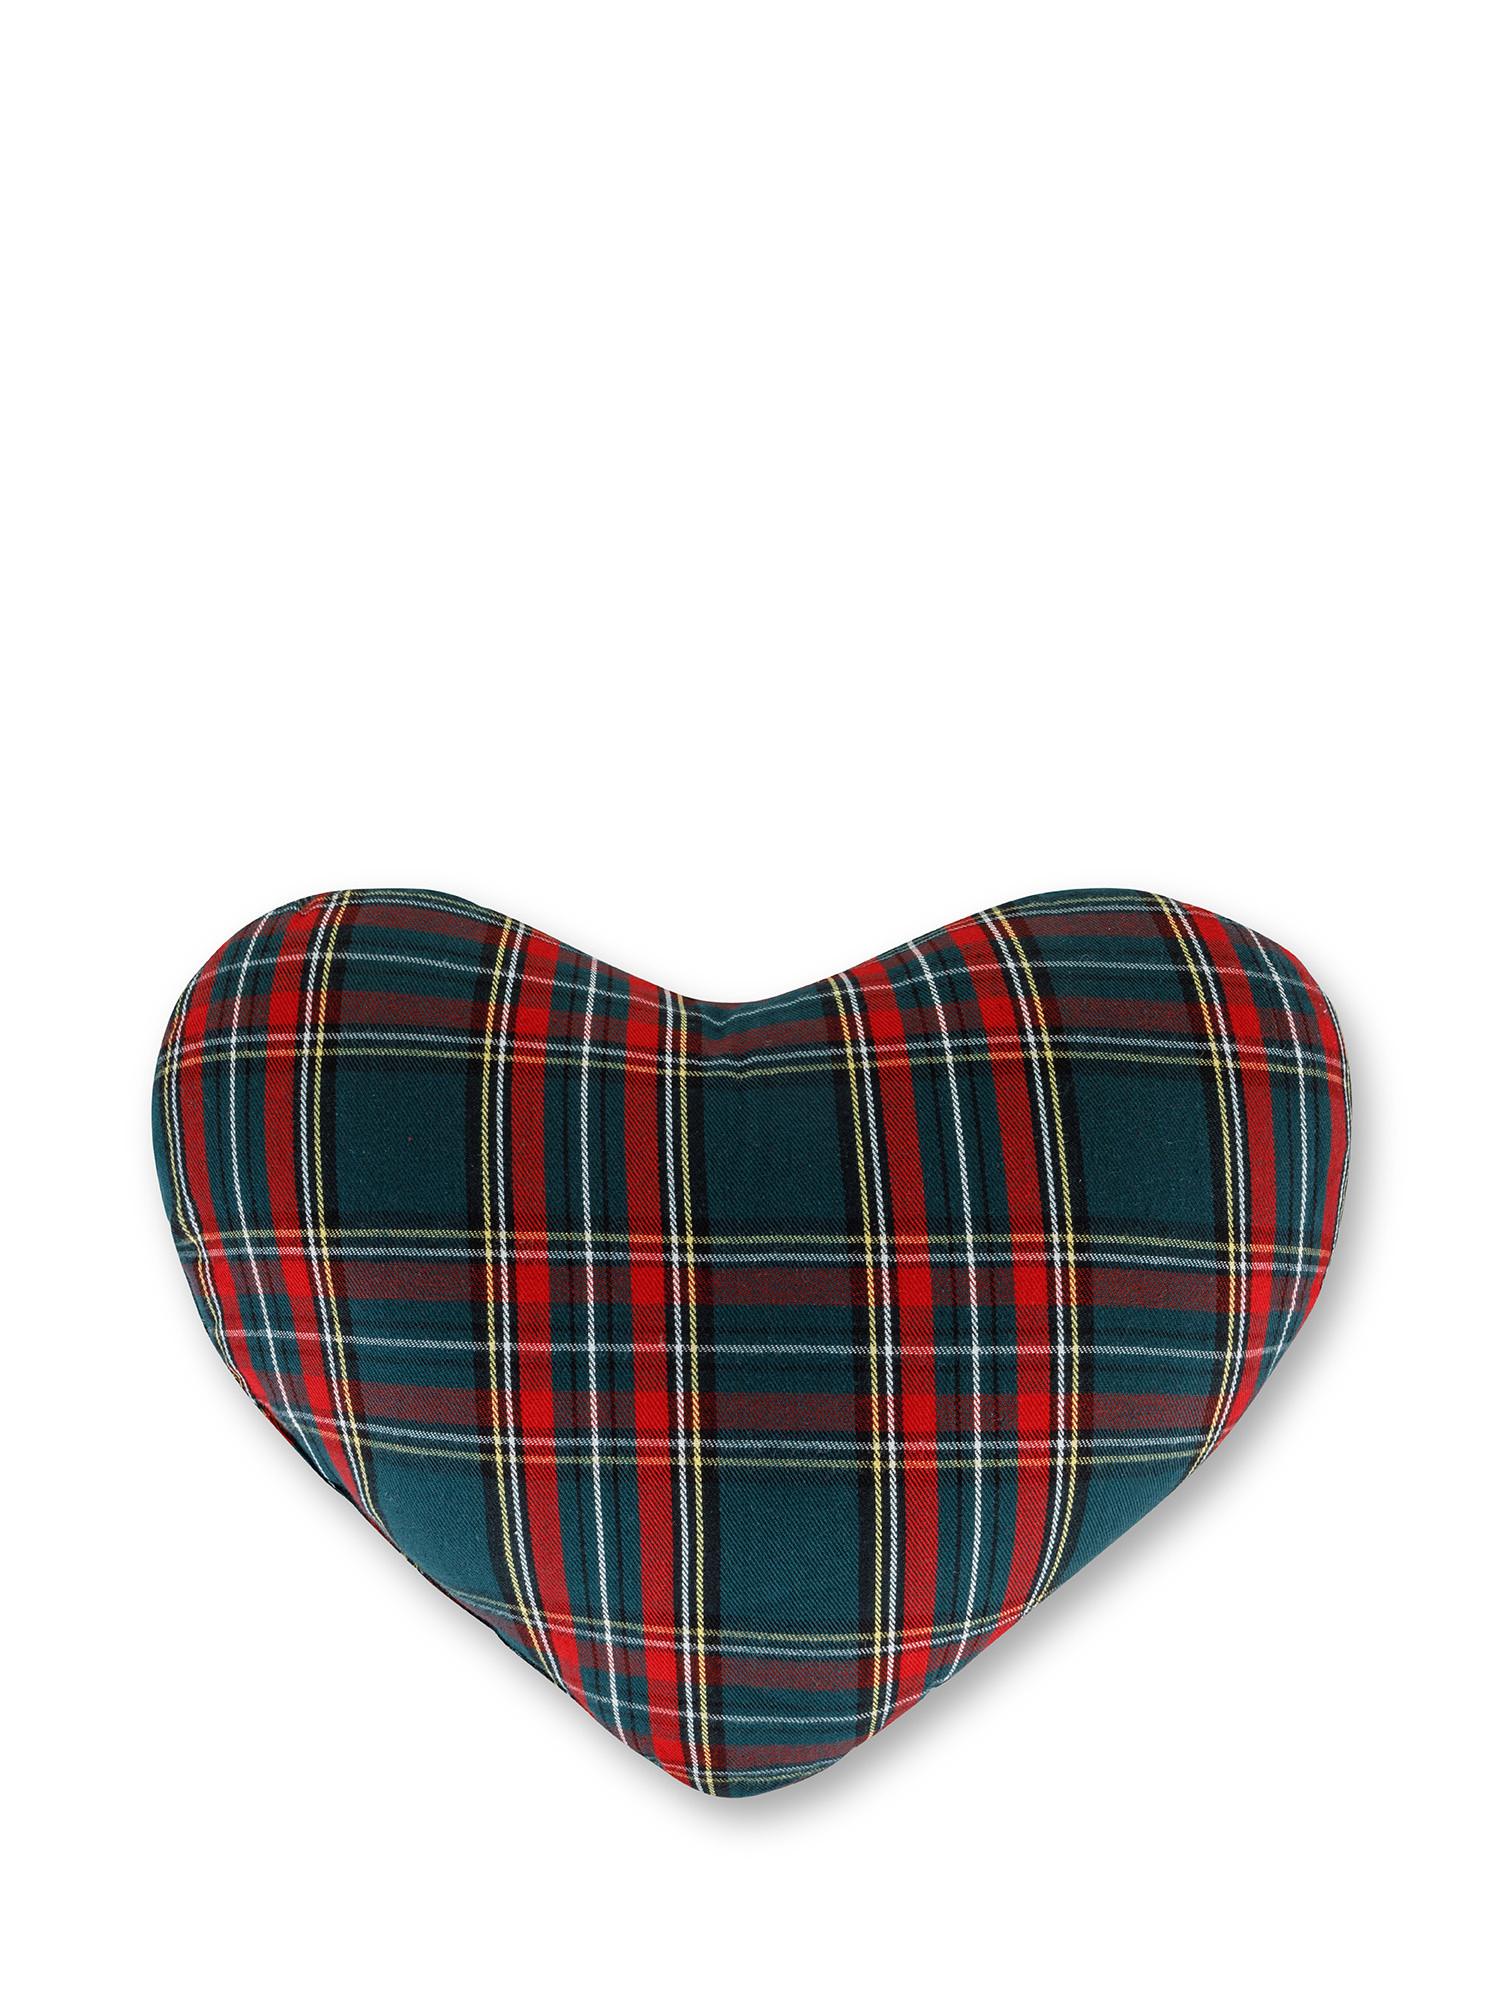 Tartan heart cushion, Green, large image number 0